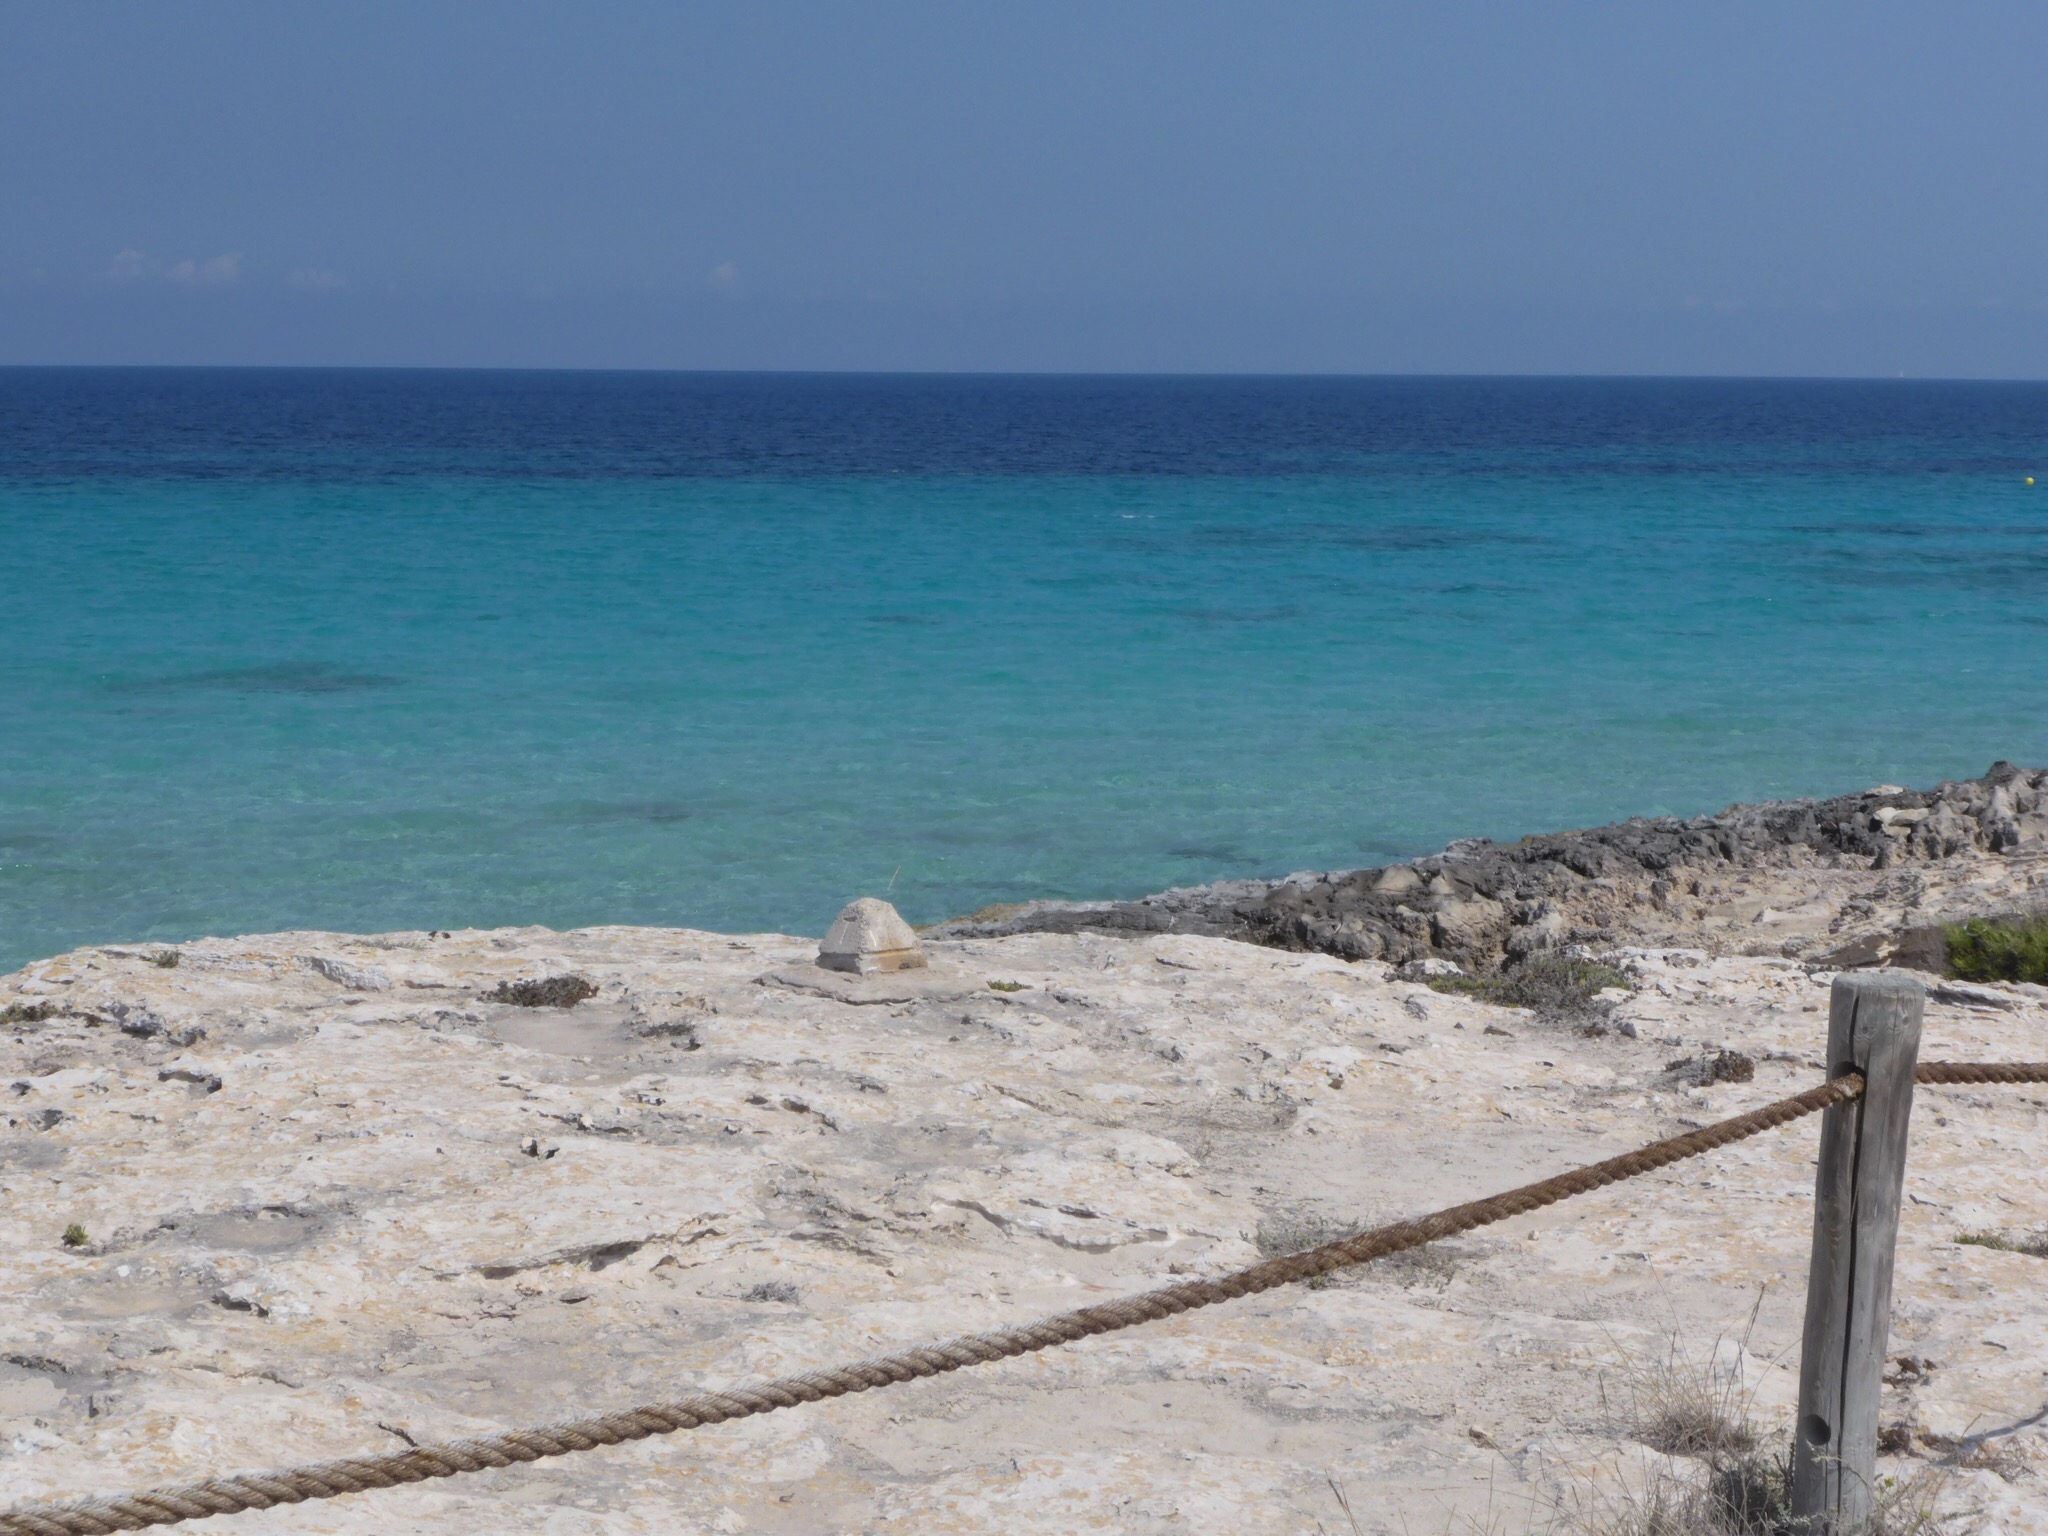 Take a ride in the Mehari over Formentera